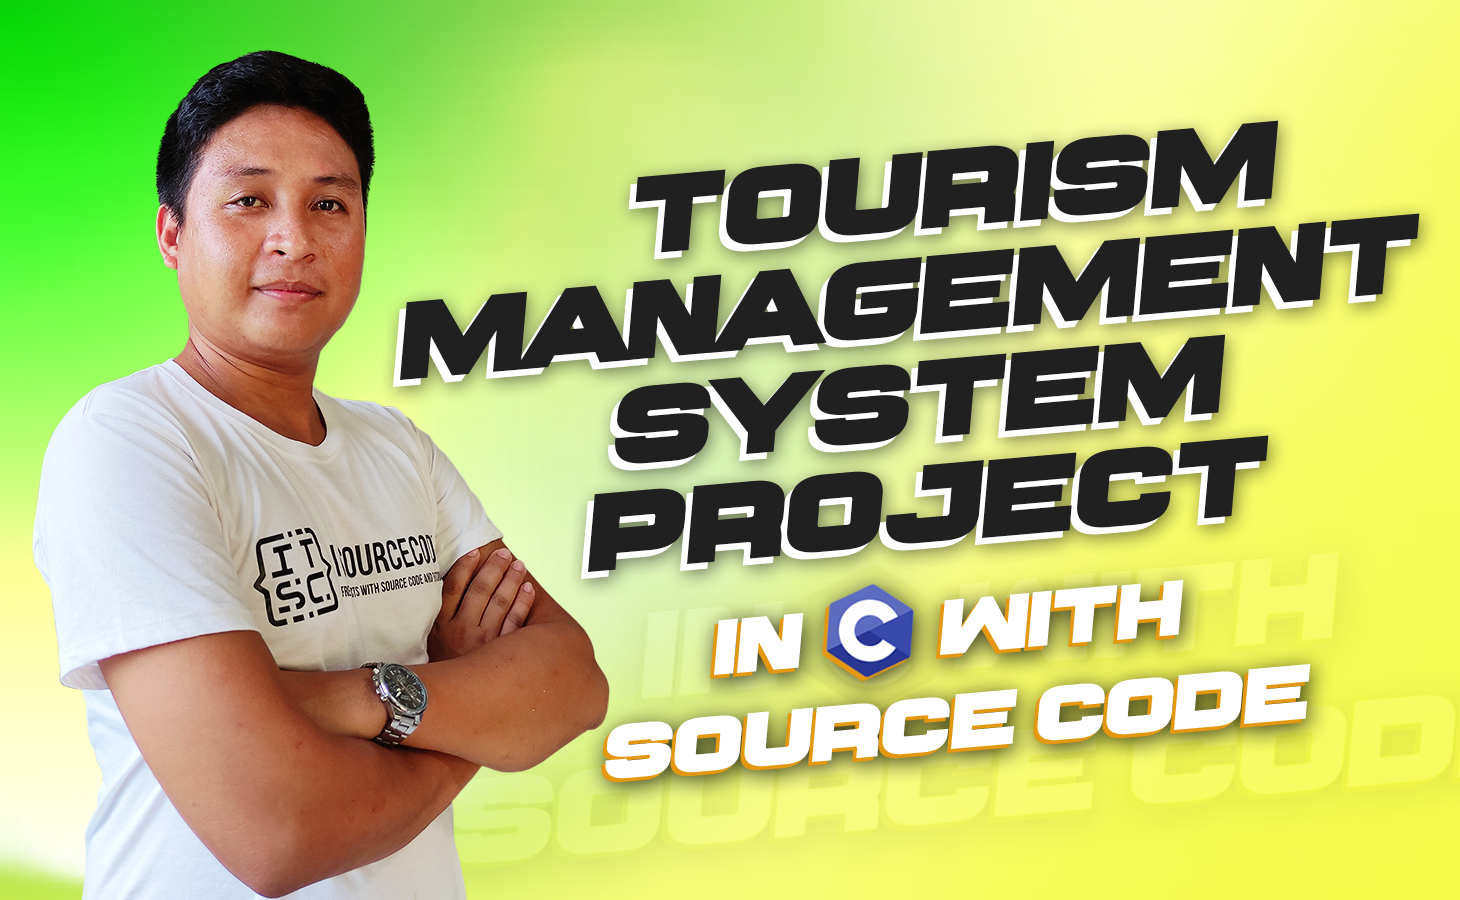 tourism management system project in c language